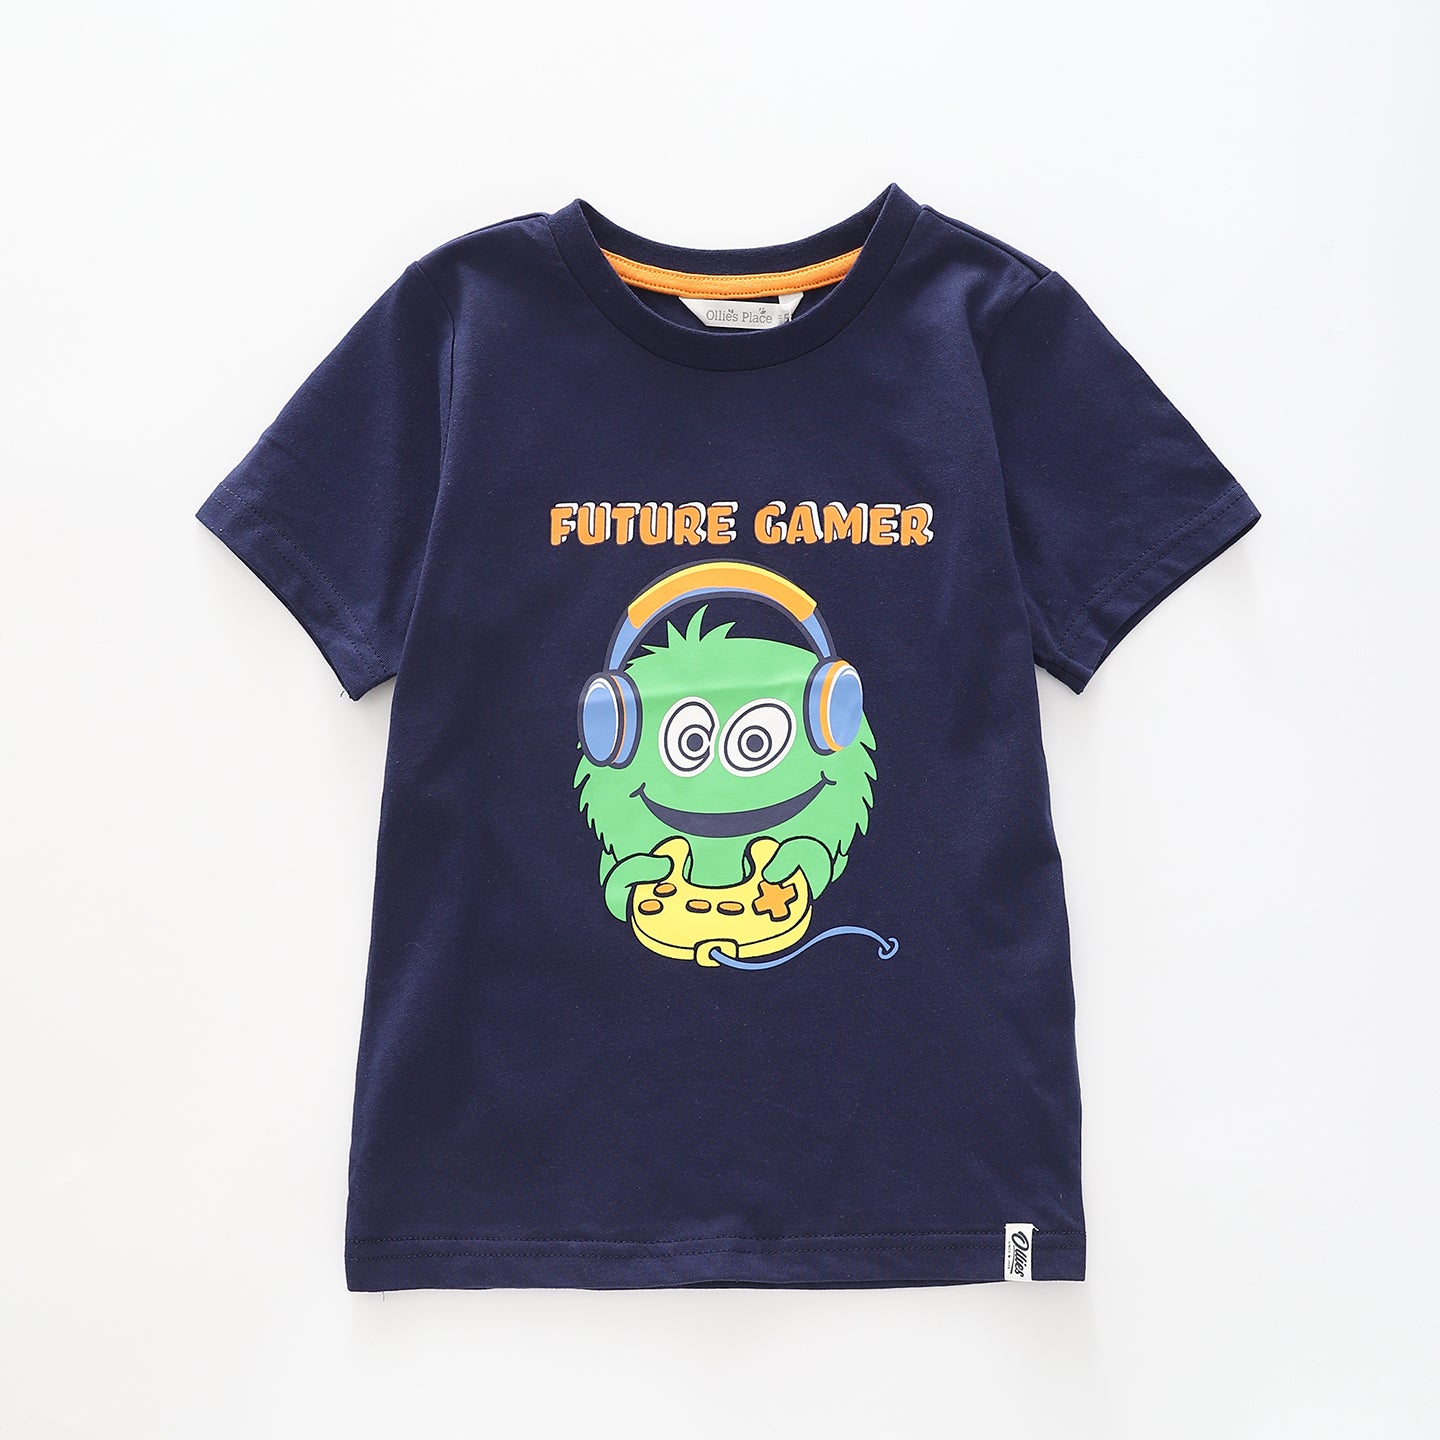 Boy's Navy Blue 'Future Gamer!' T-shirt With Gamer Print